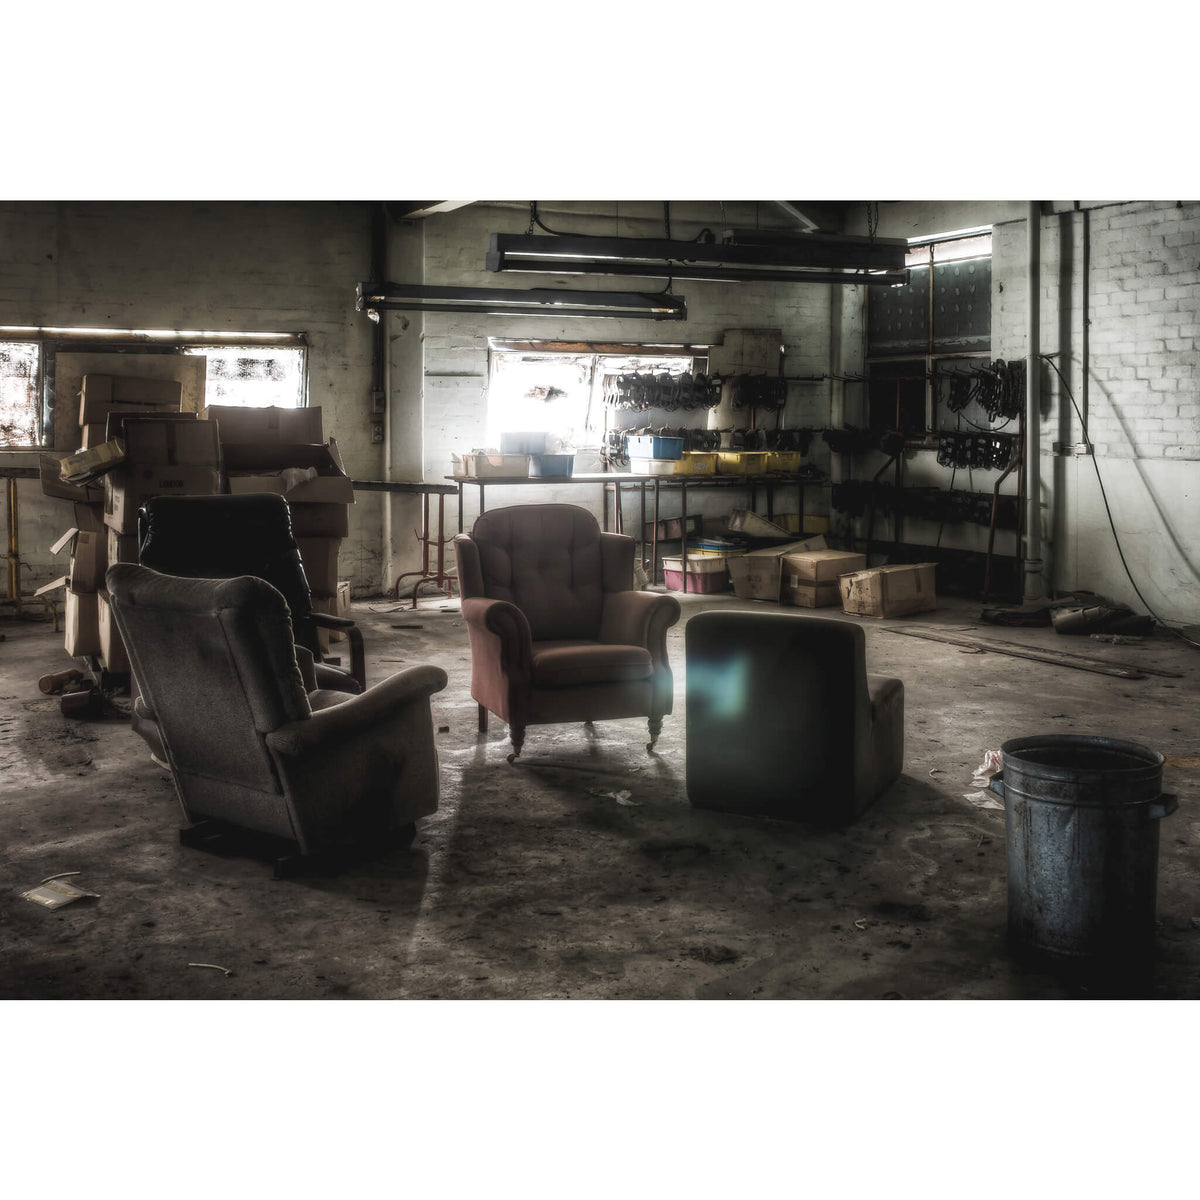 Smoko Area | Abandoned Shoe Factory Fine Art Print - Lost Collective Shop